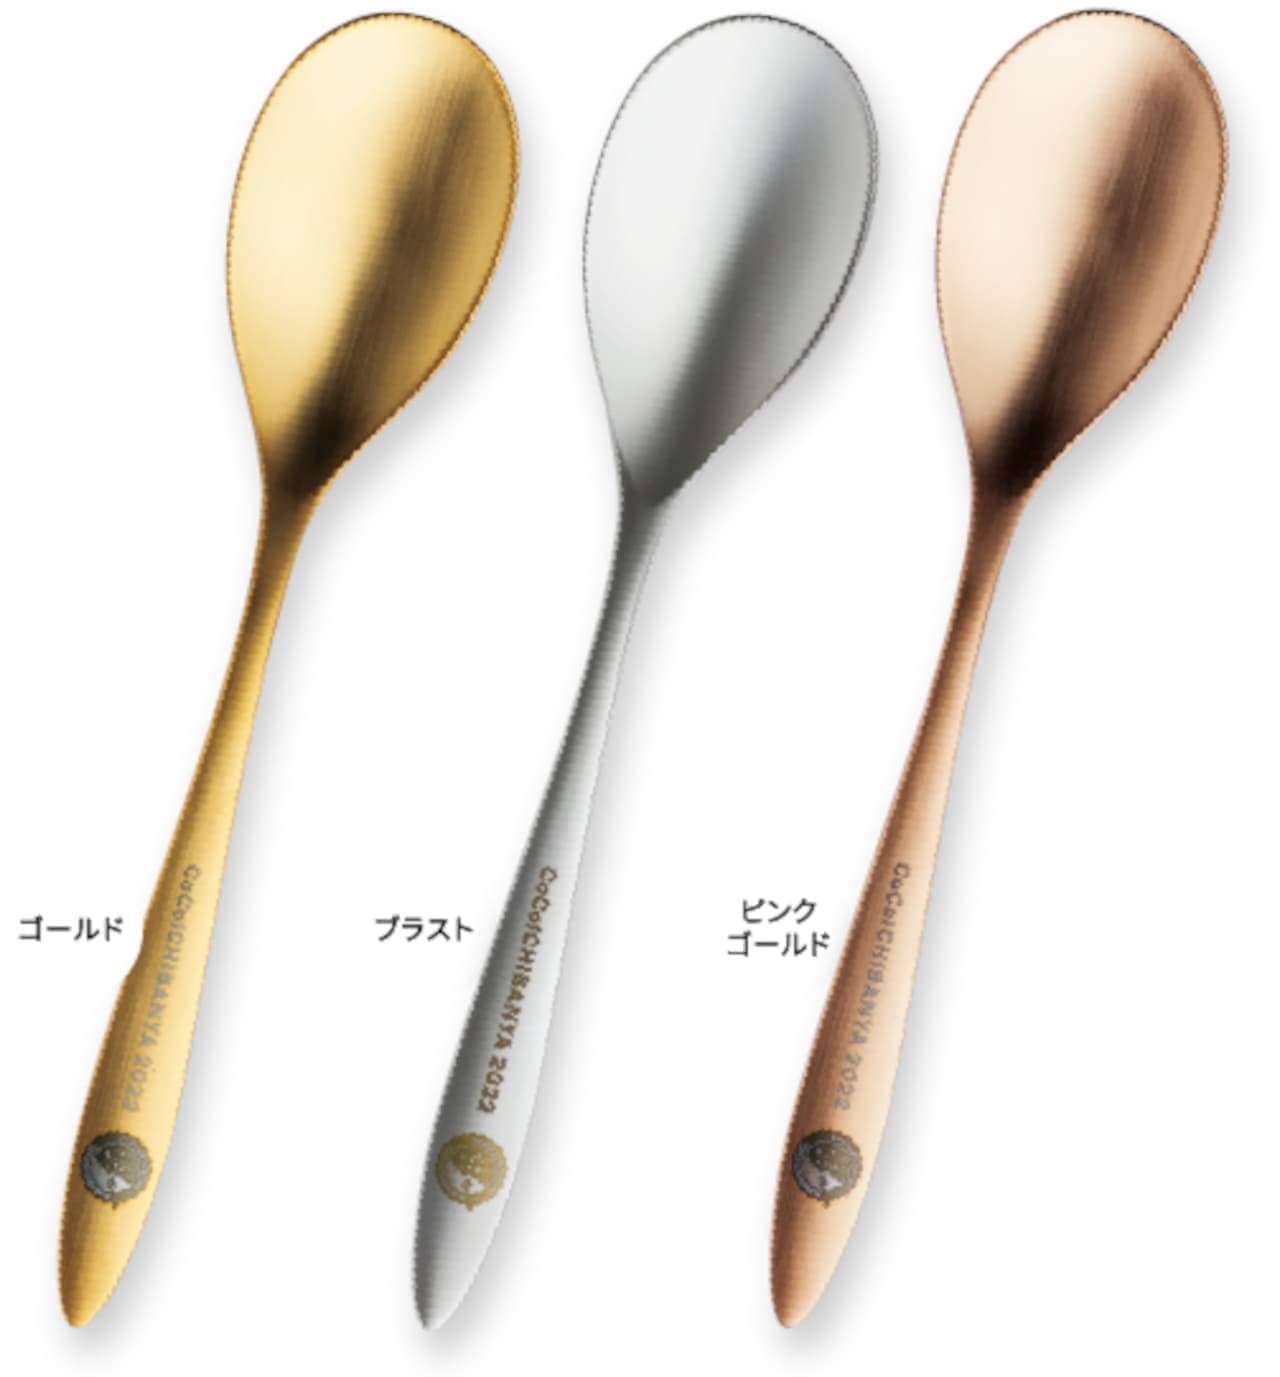 CoCo Ichibanya "Original Spoon